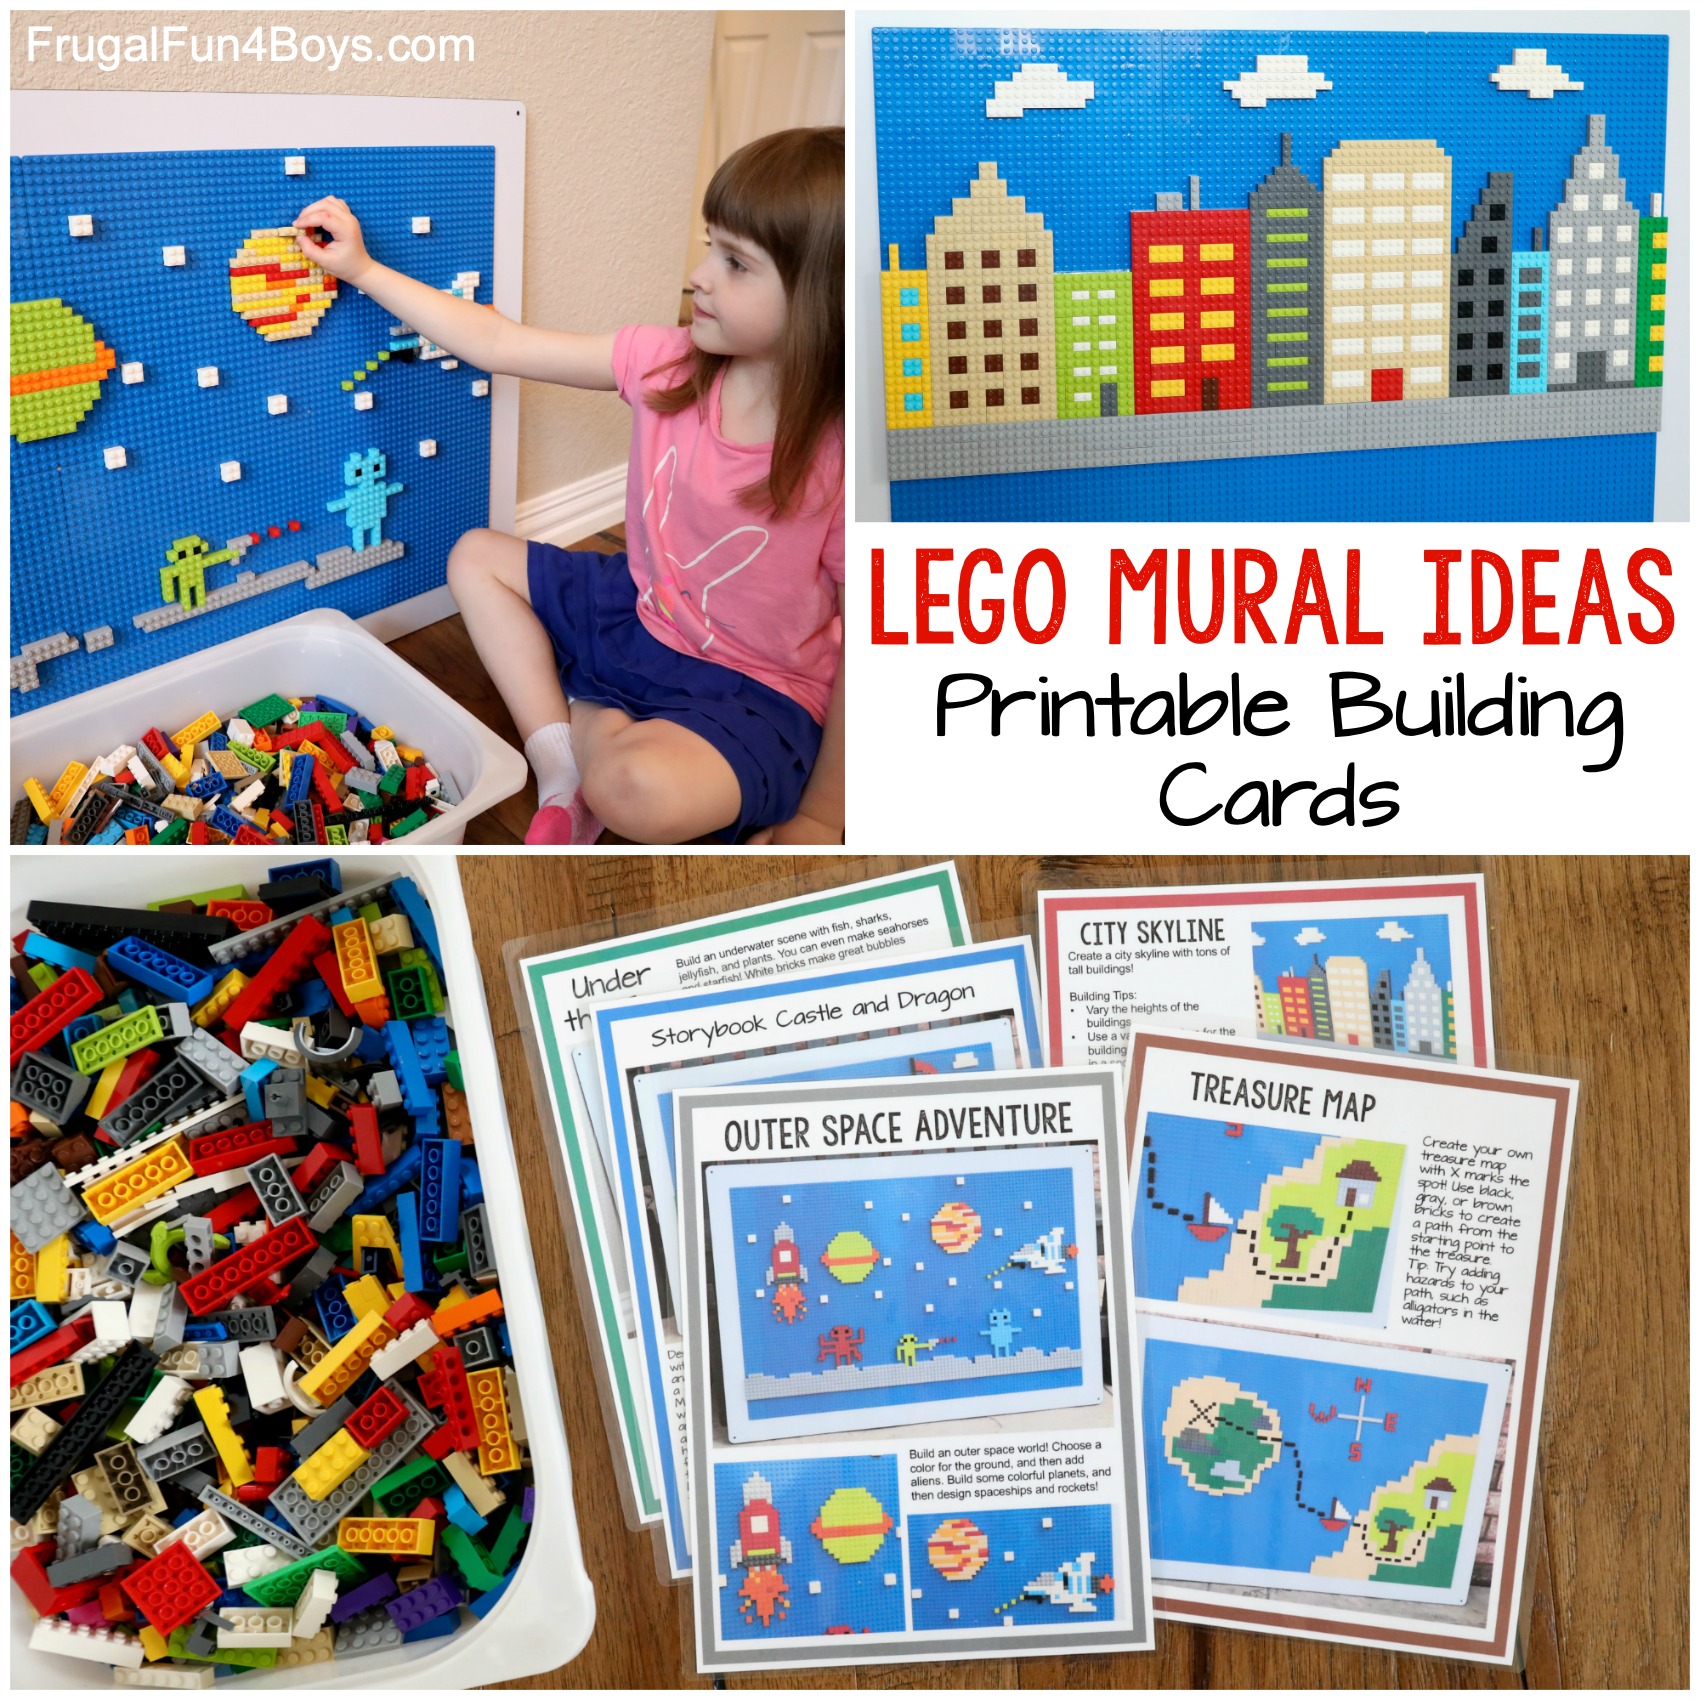 LEGO IDEAS - Lego Color Chart Cards